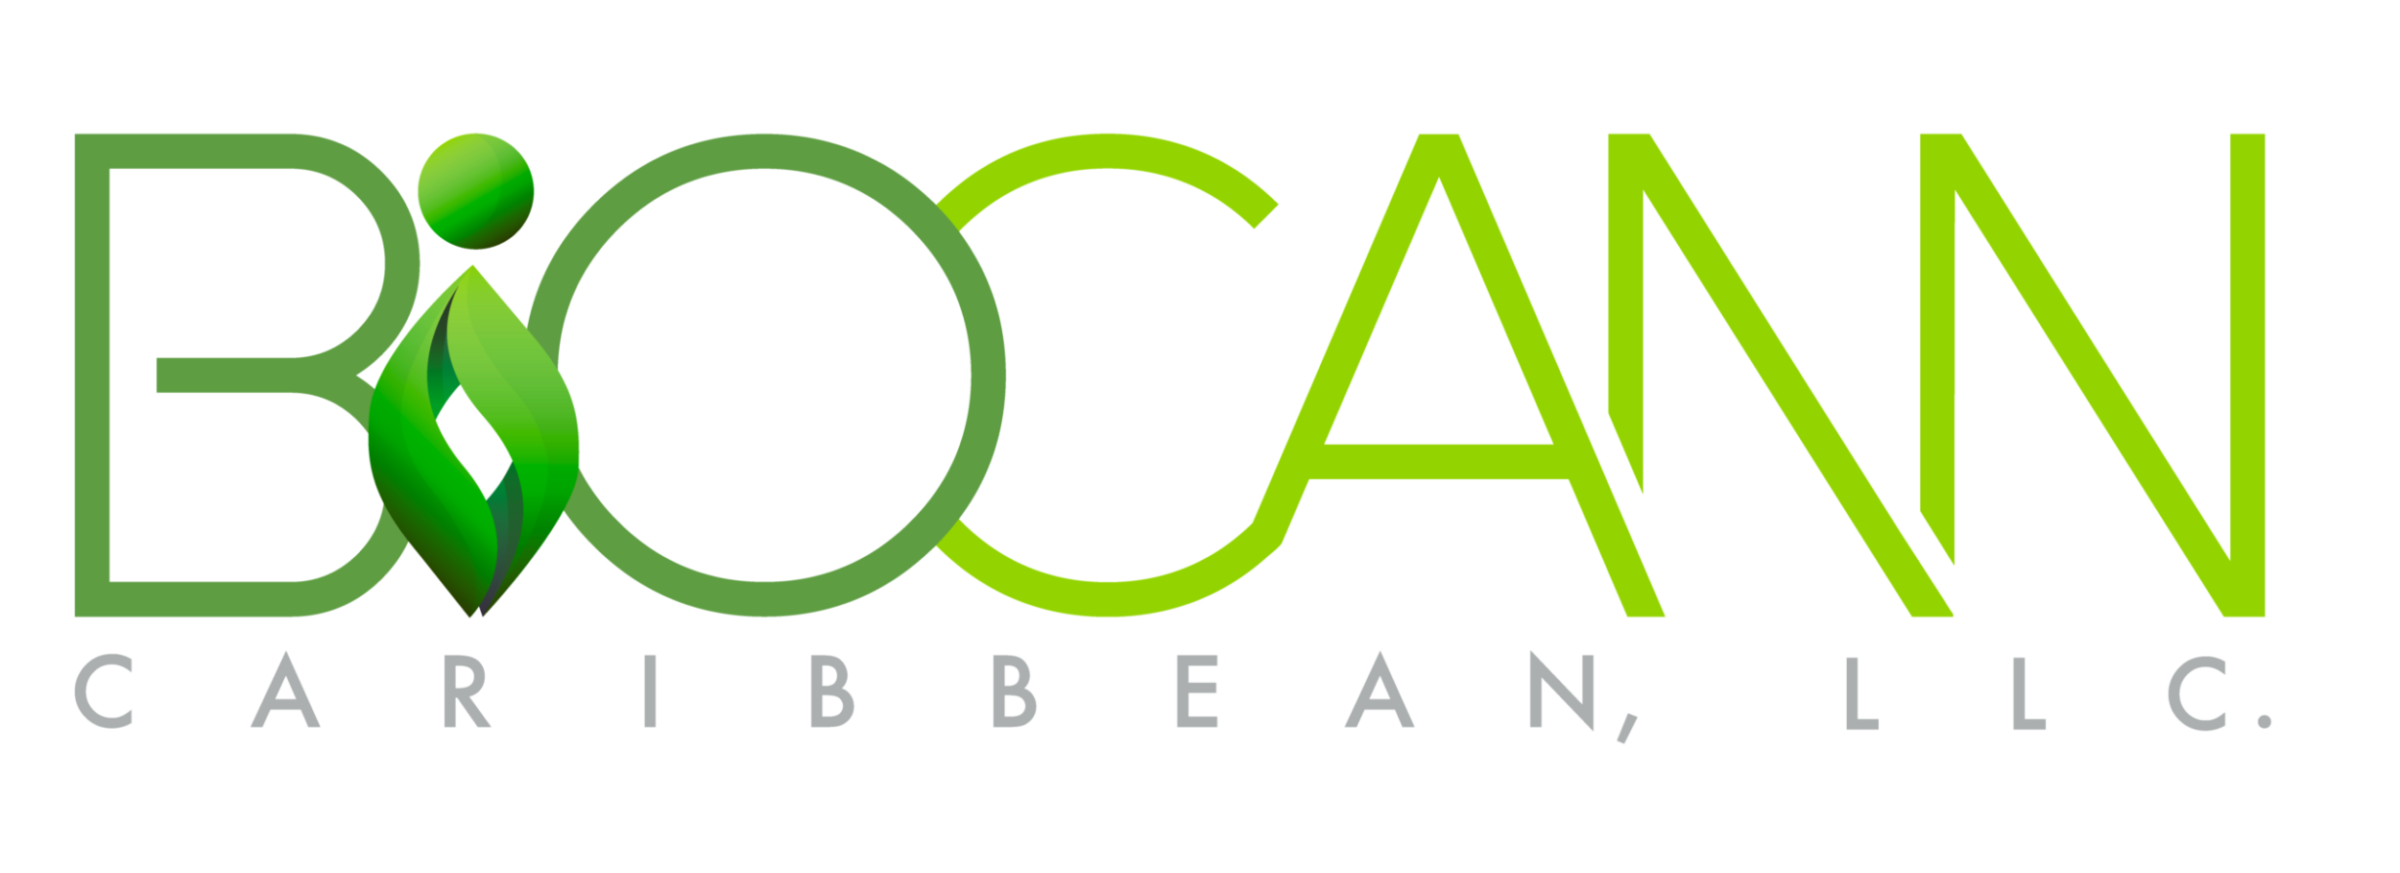 biocann logo